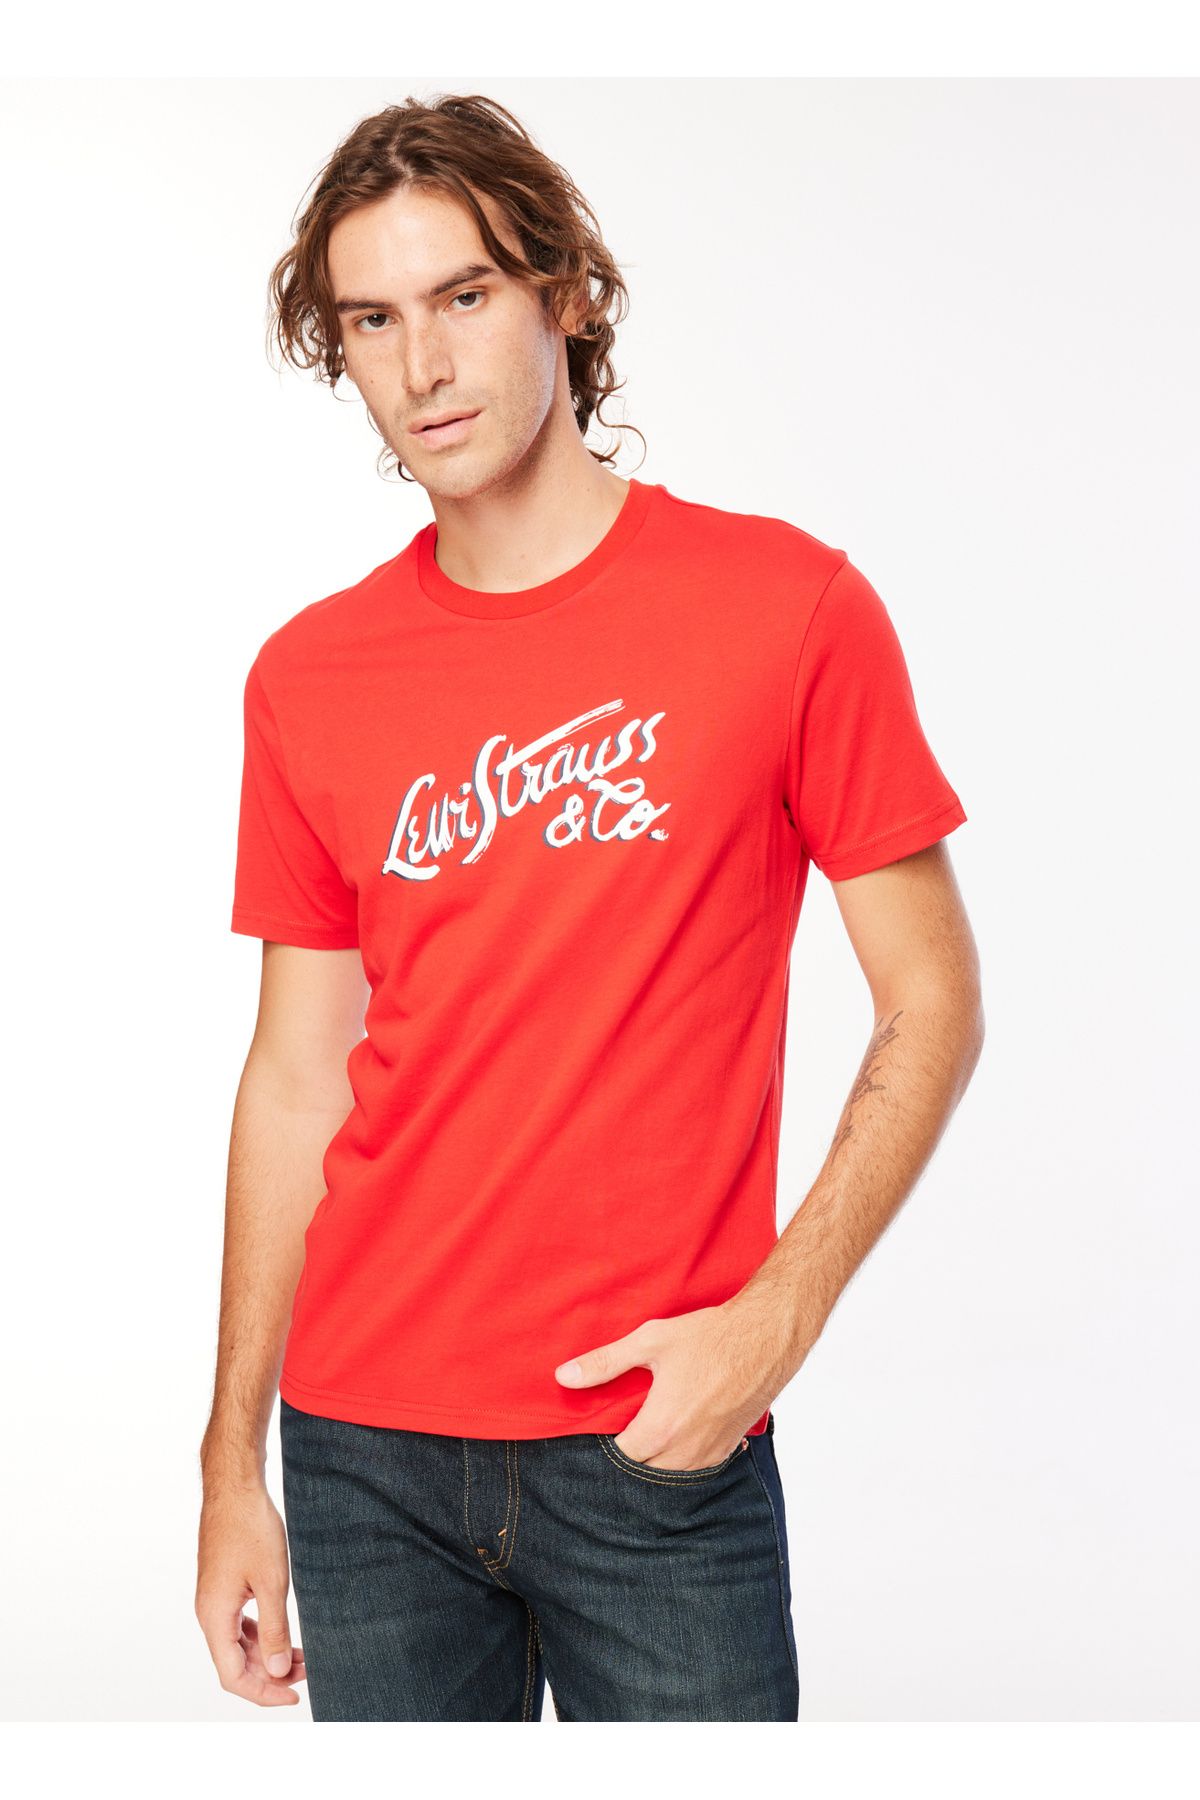 Levi's Levis Bisiklet Yaka Baskılı Kırmızı Erkek T-Shirt 16960-1067_BLRMT GRAPHIC CRWNK T 1